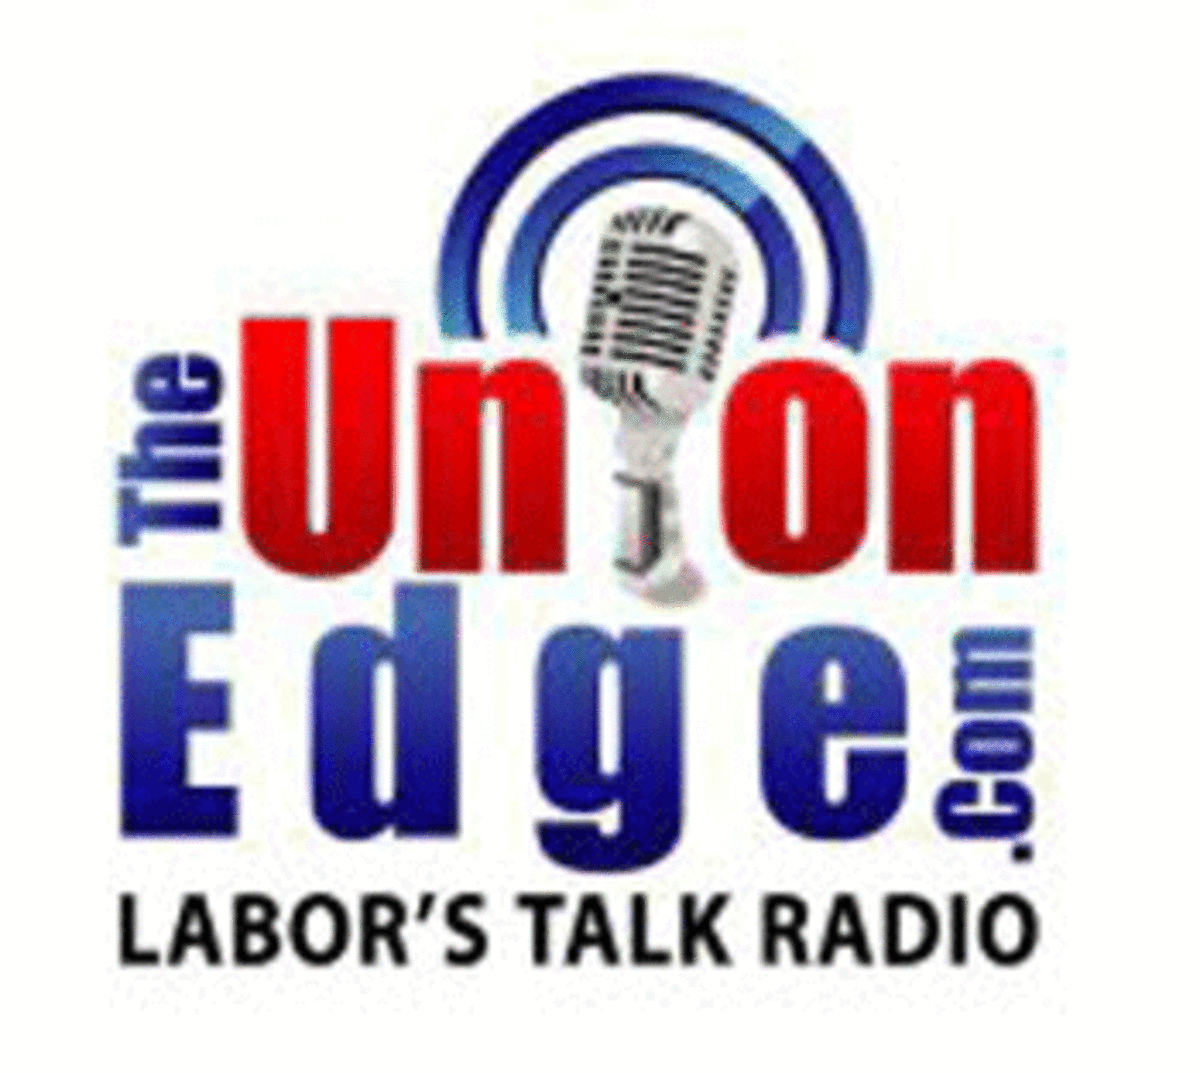 union edge